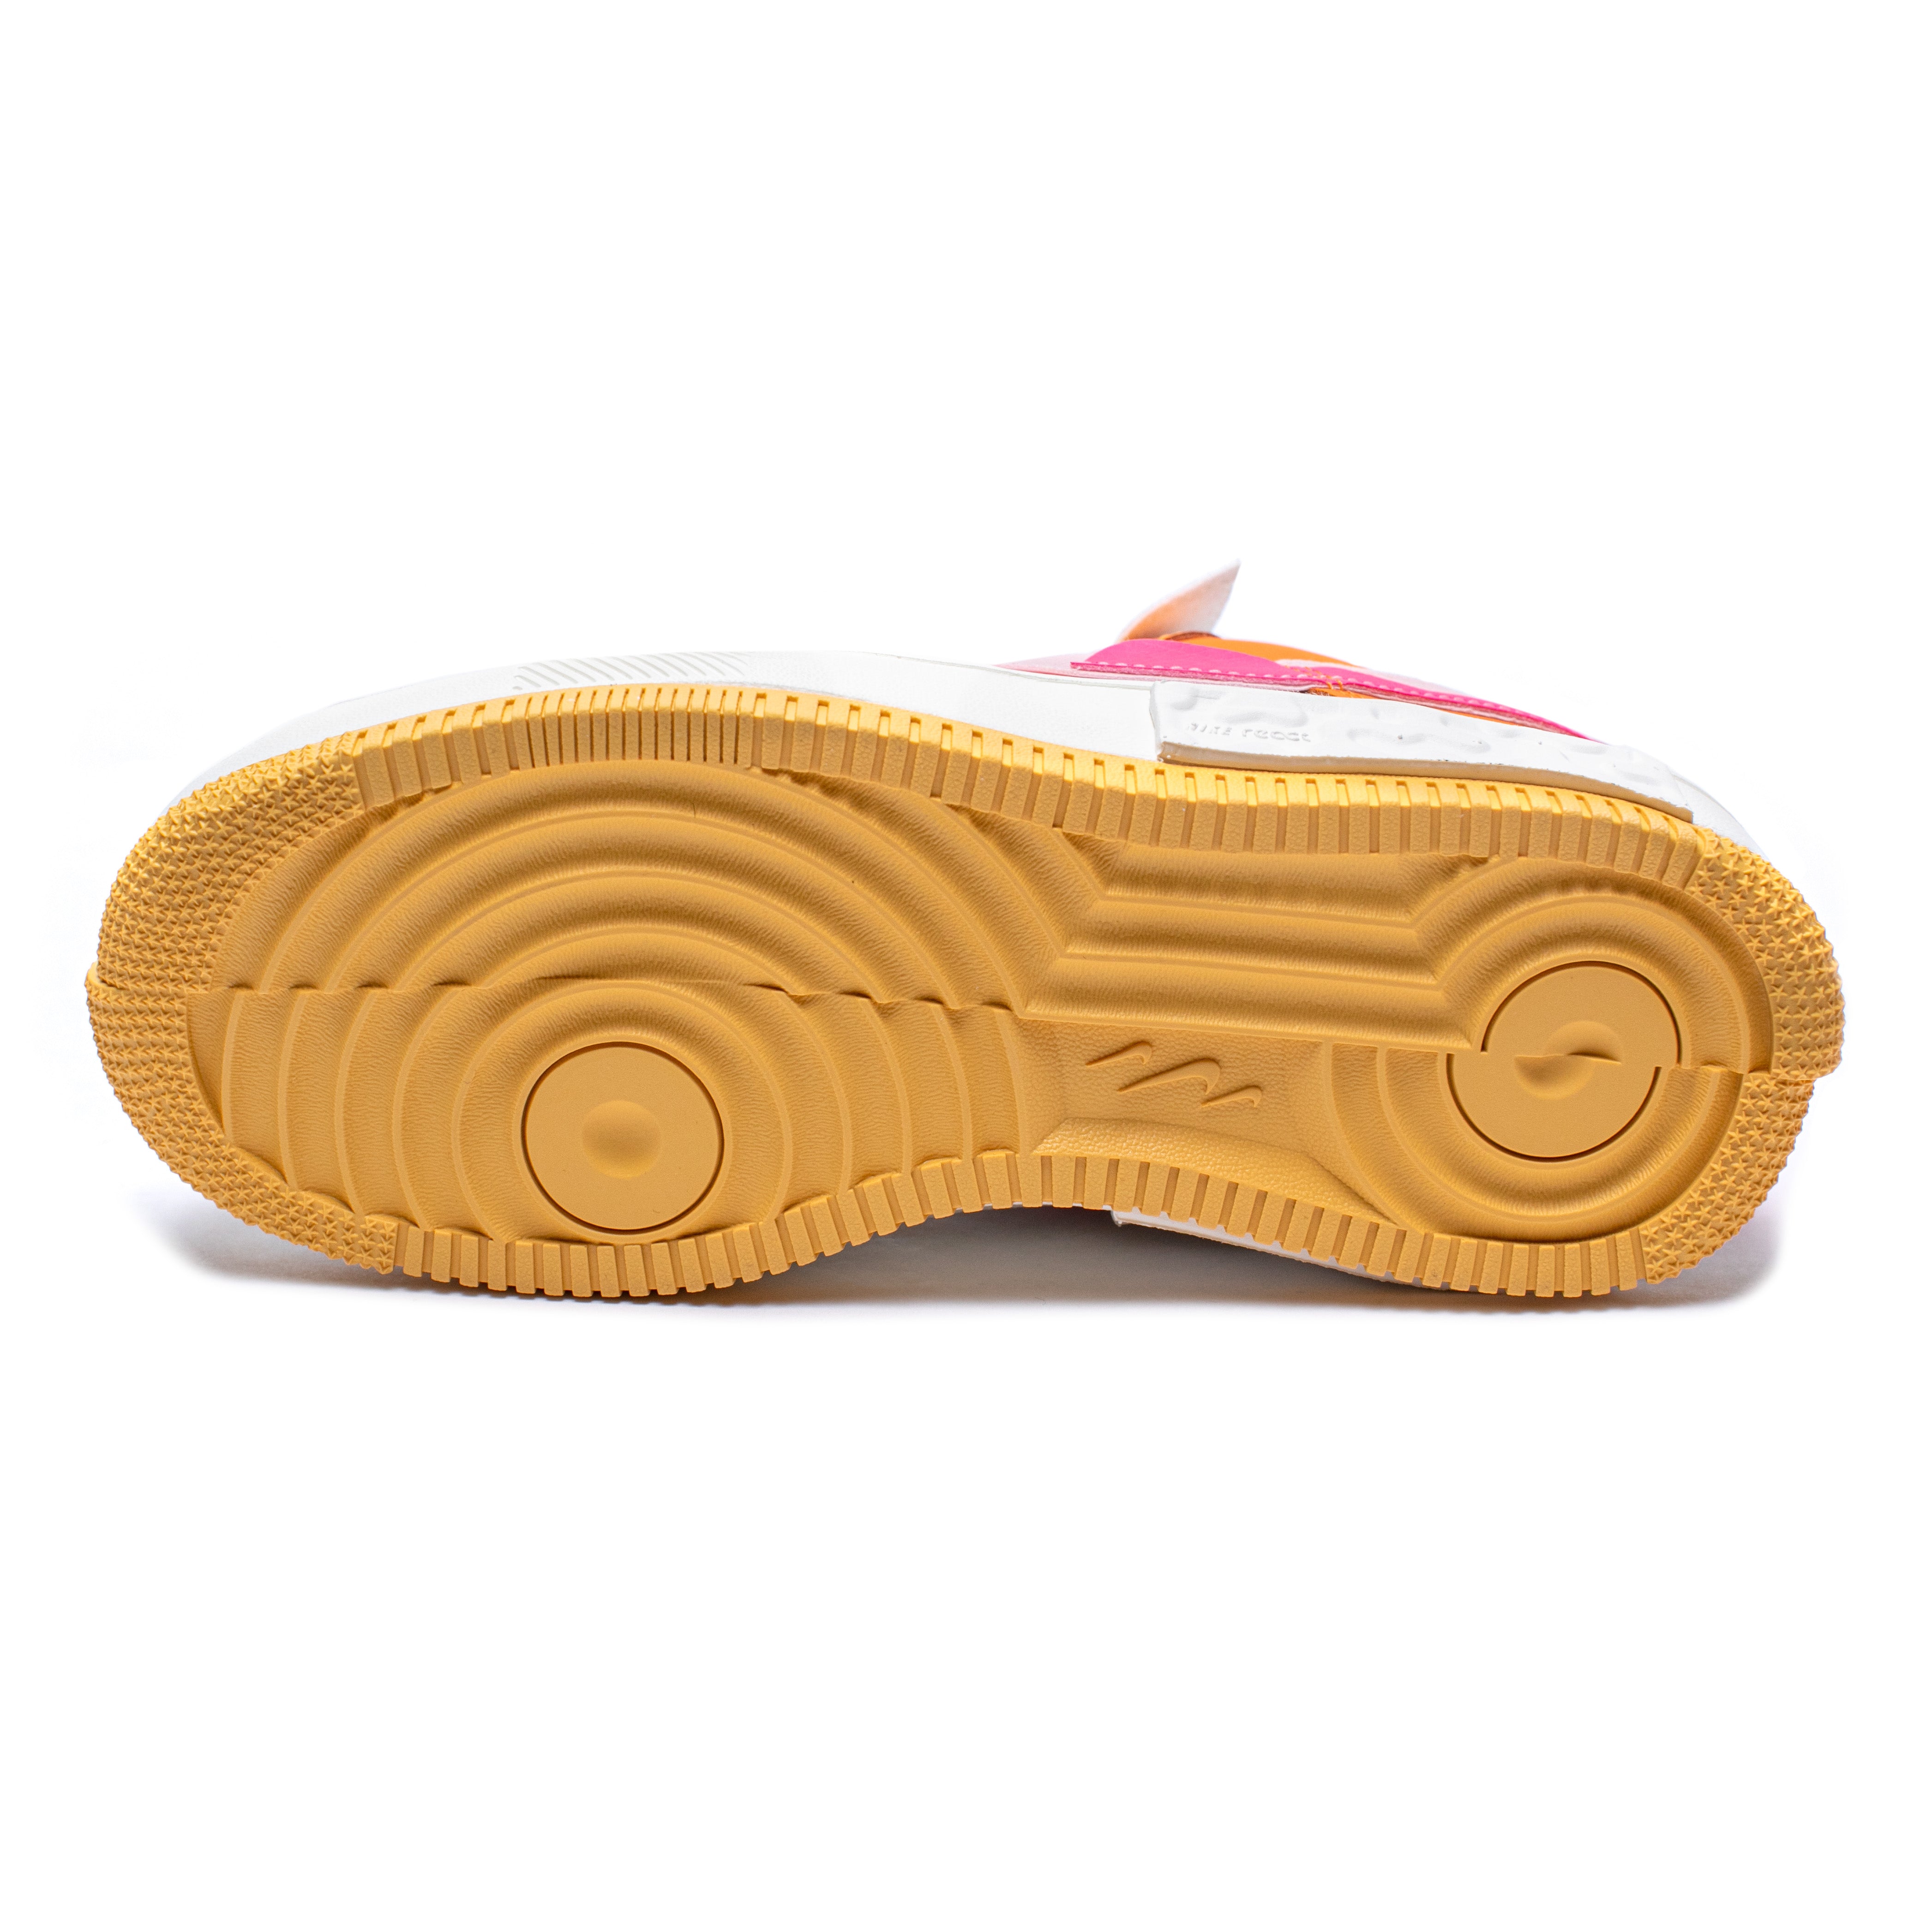 Nike Air Force 1 Fontanka ‘White/Yellow/Pink’